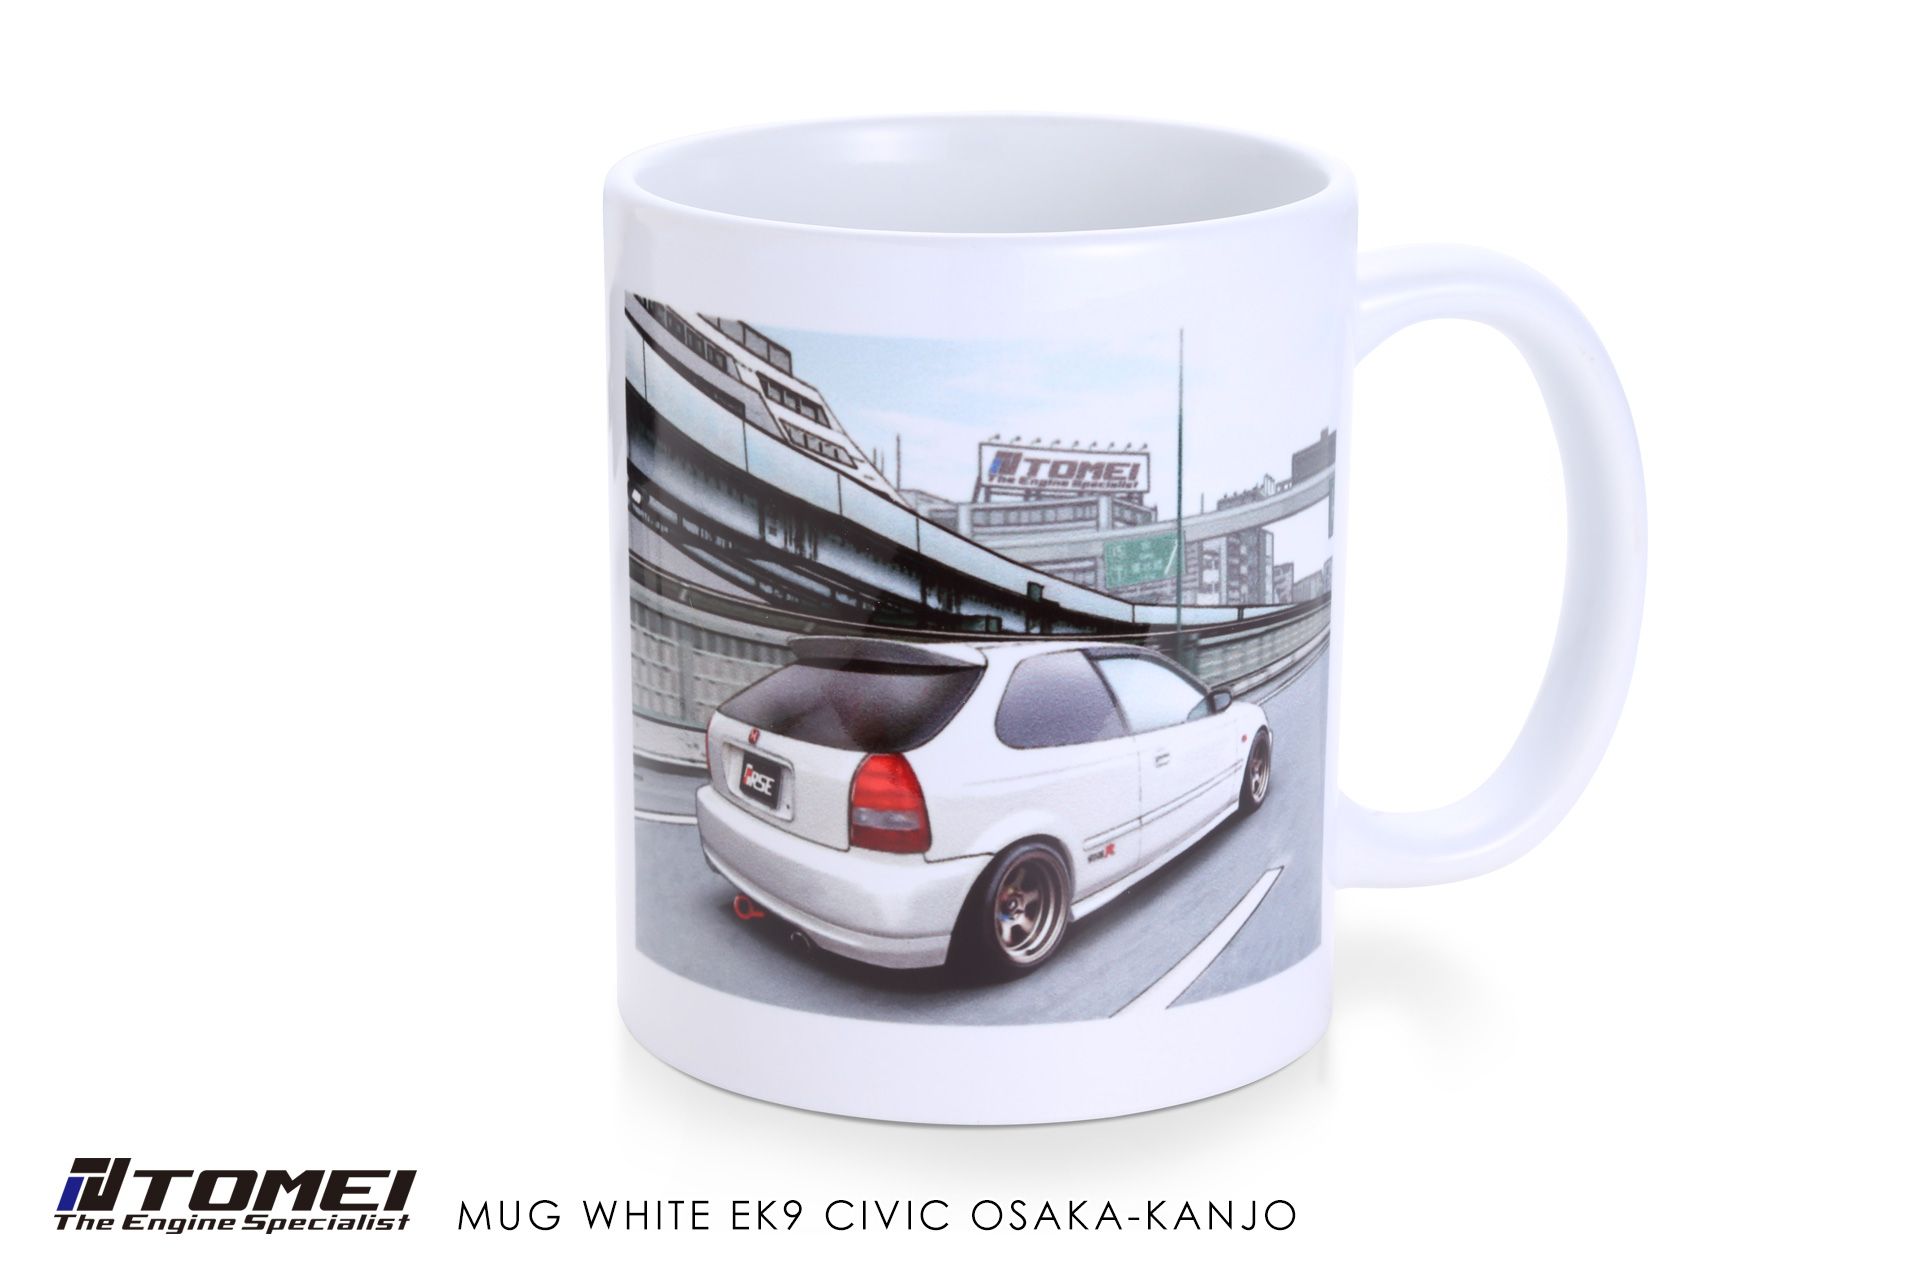 Tomei Mug White EK9 Civic Osaka-Kanjo